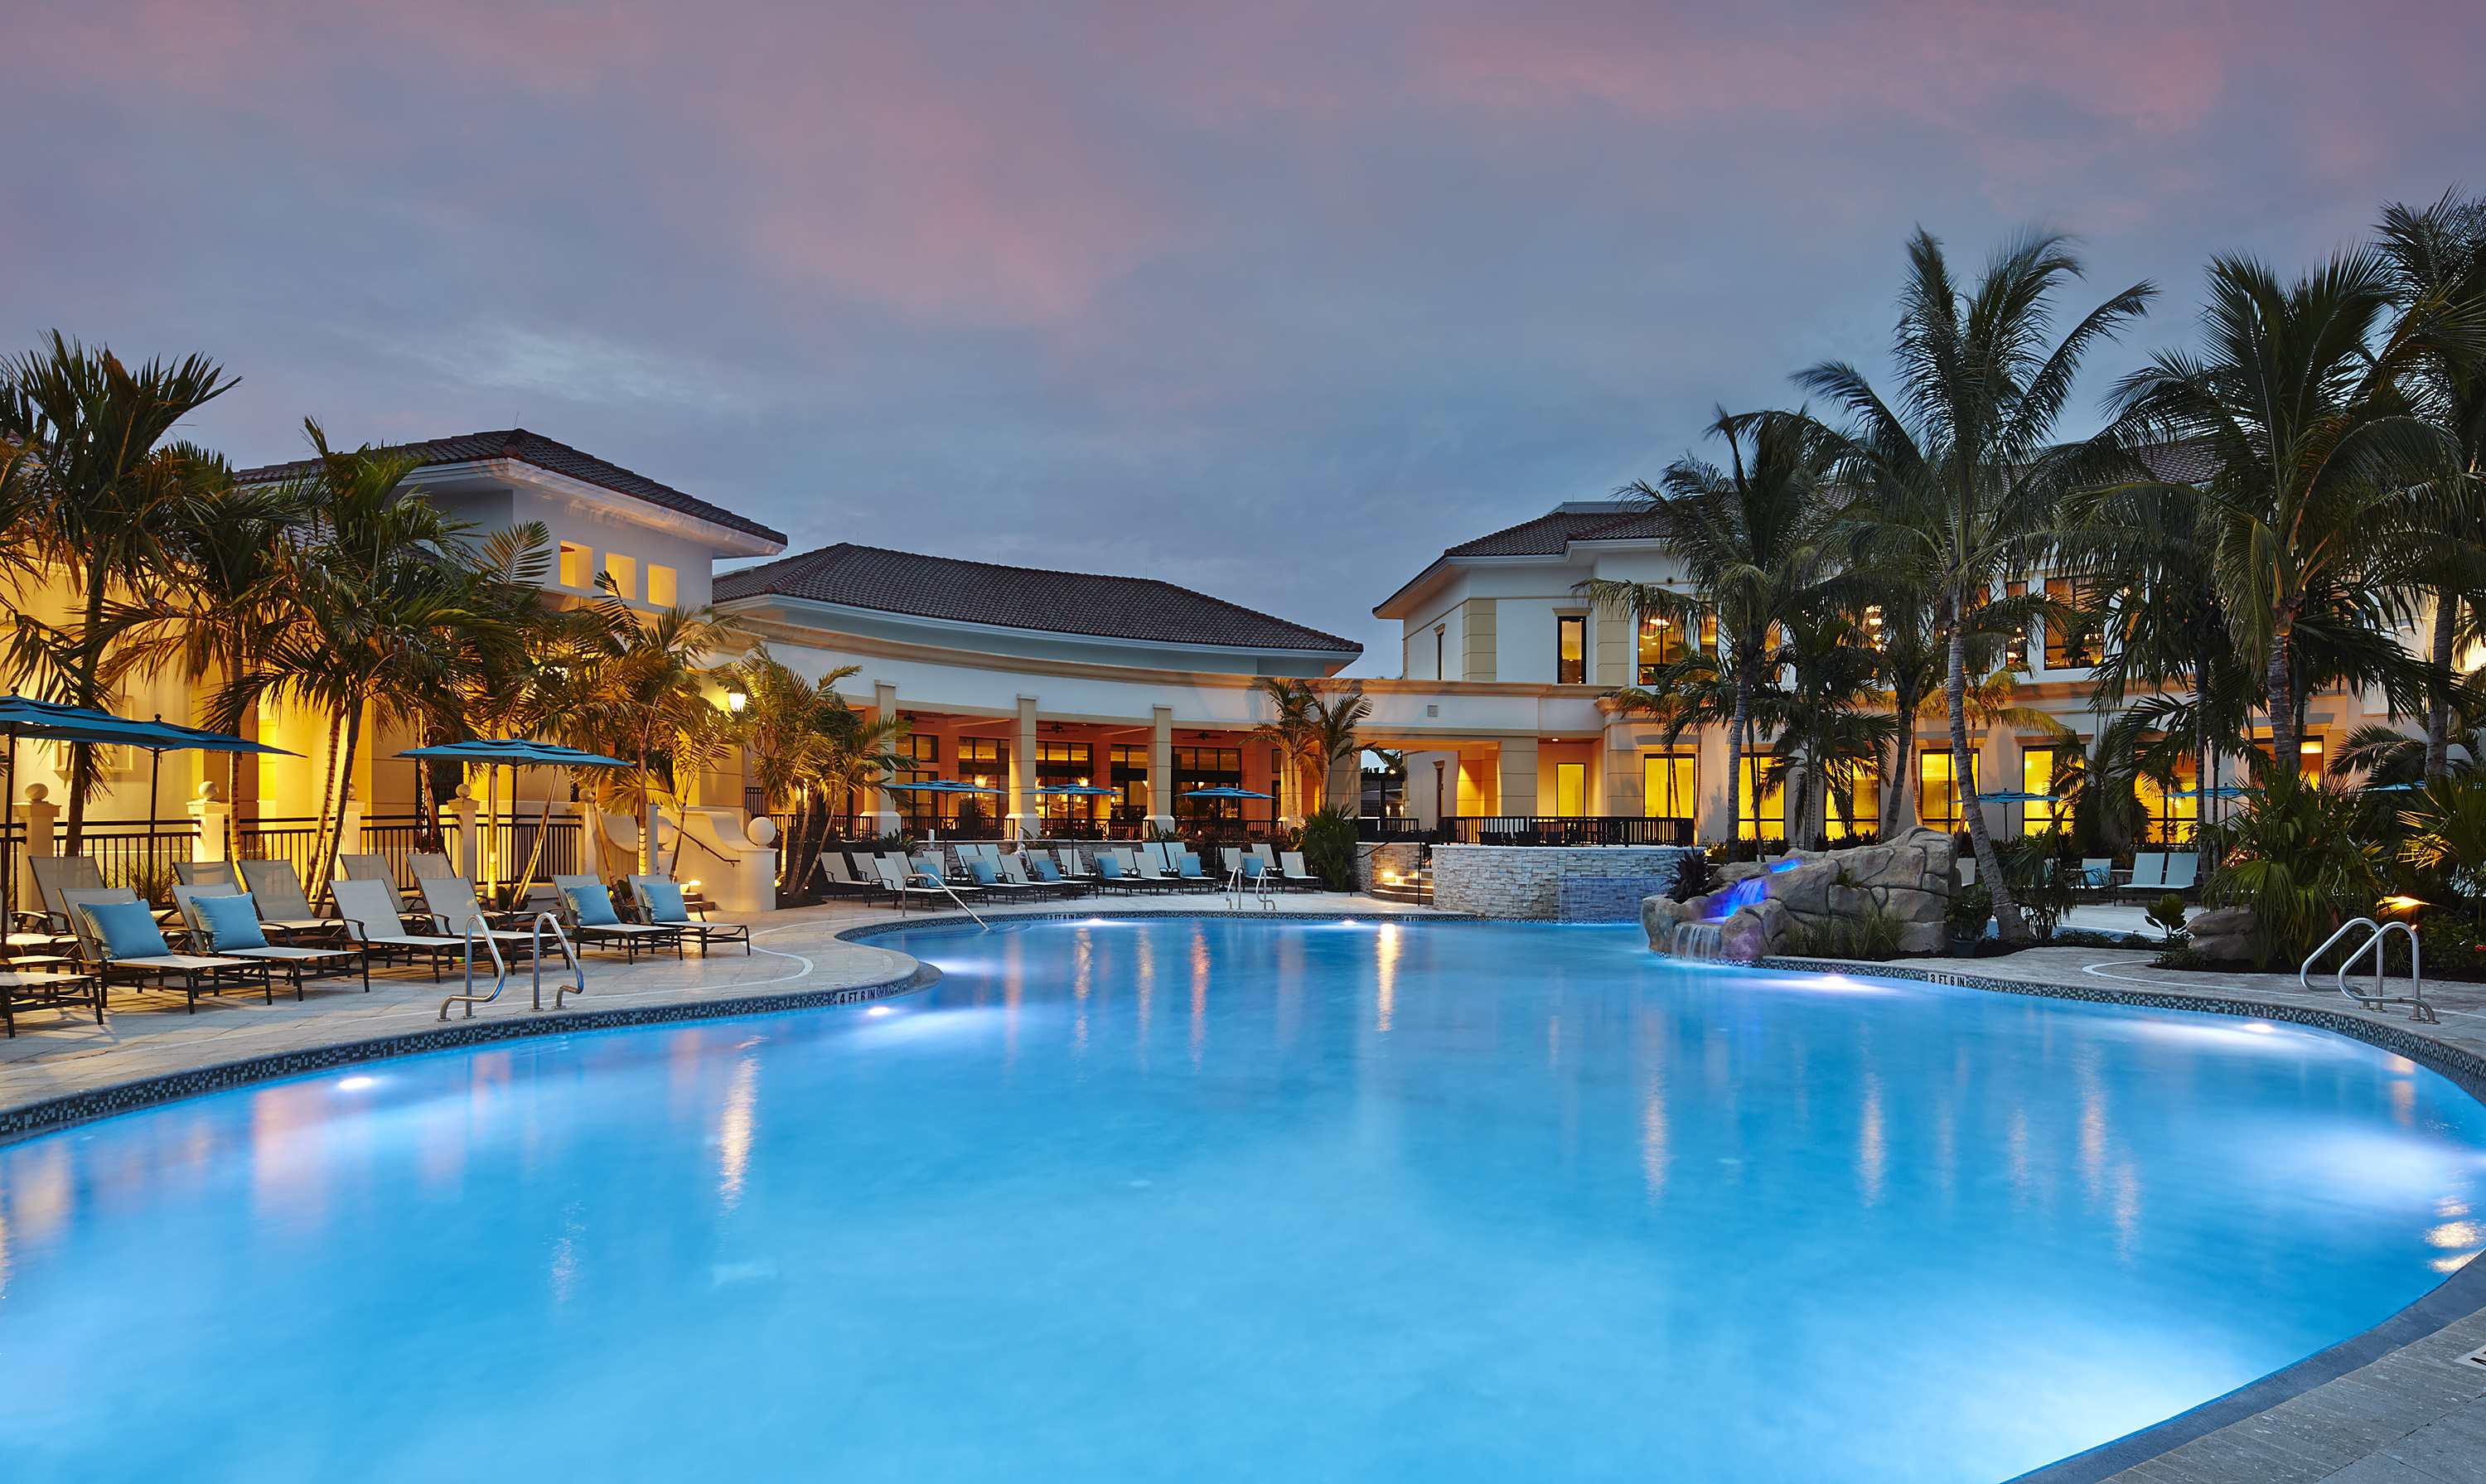 The Resort Pool